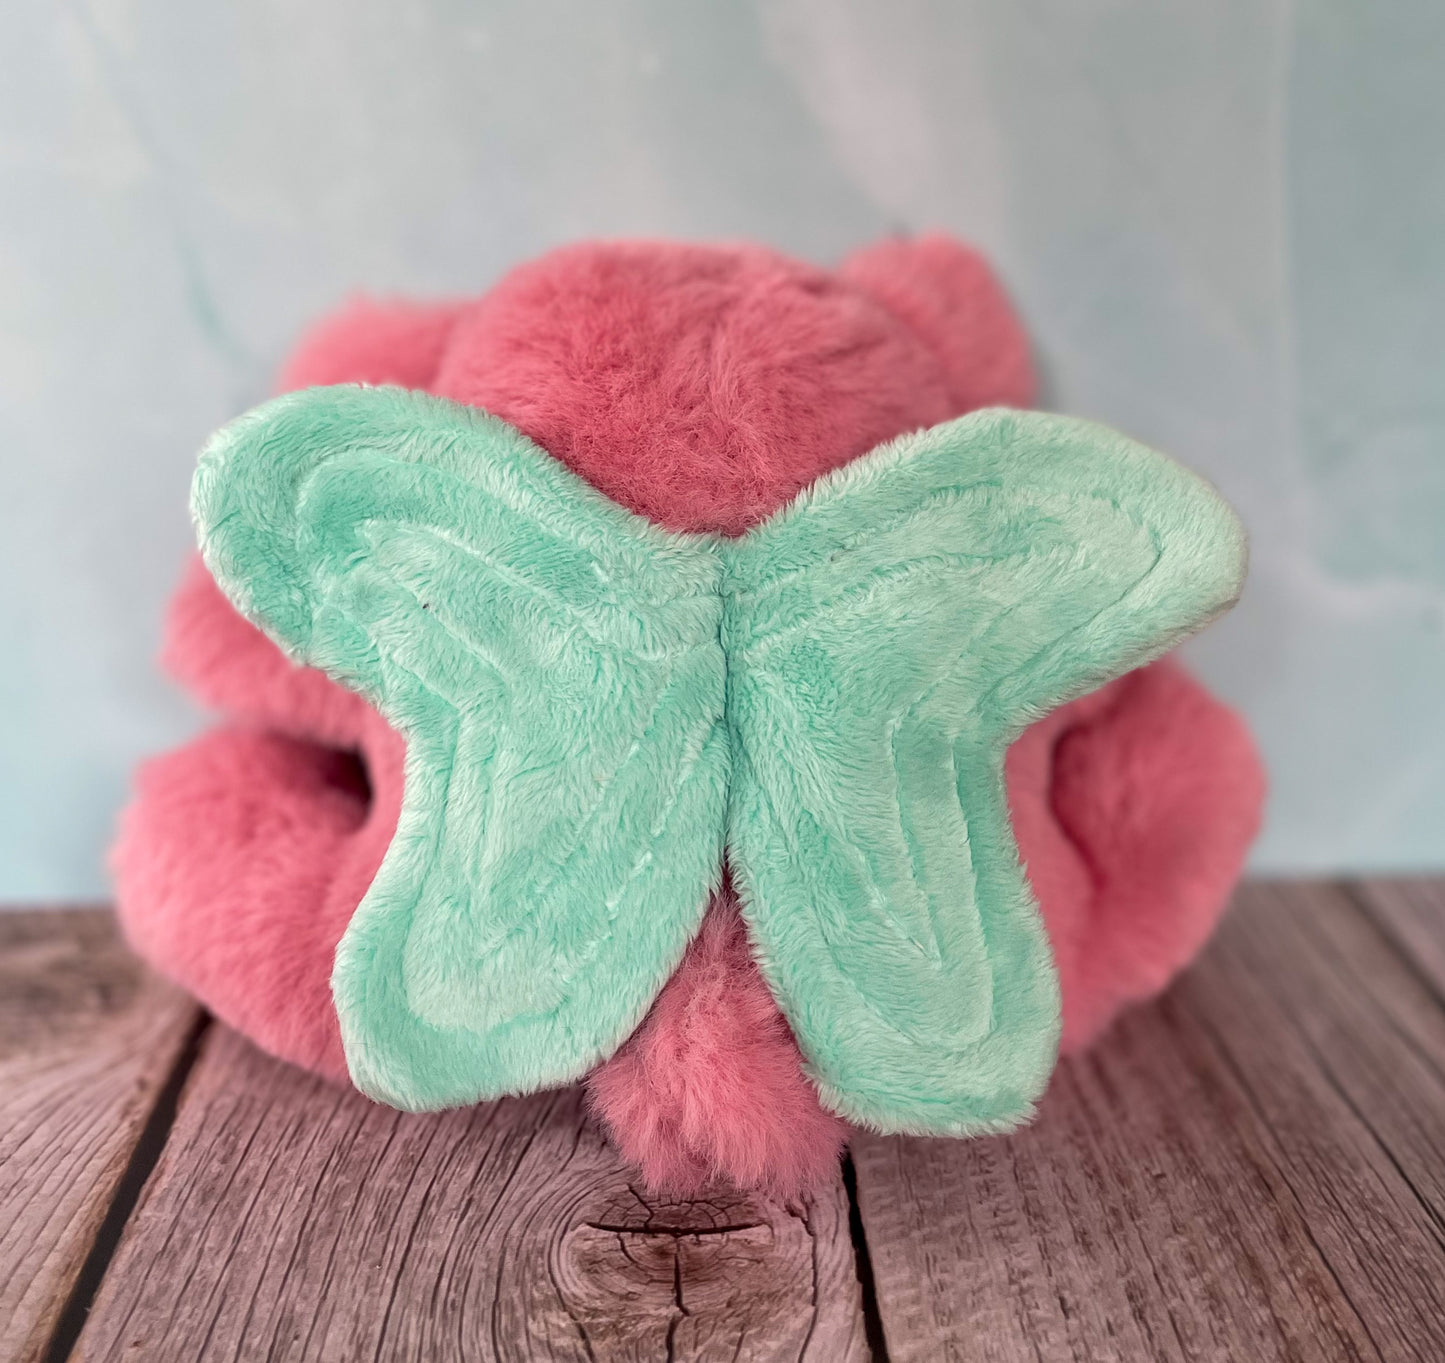 Fairy Bear - Handmade Stuffed Animal Plush